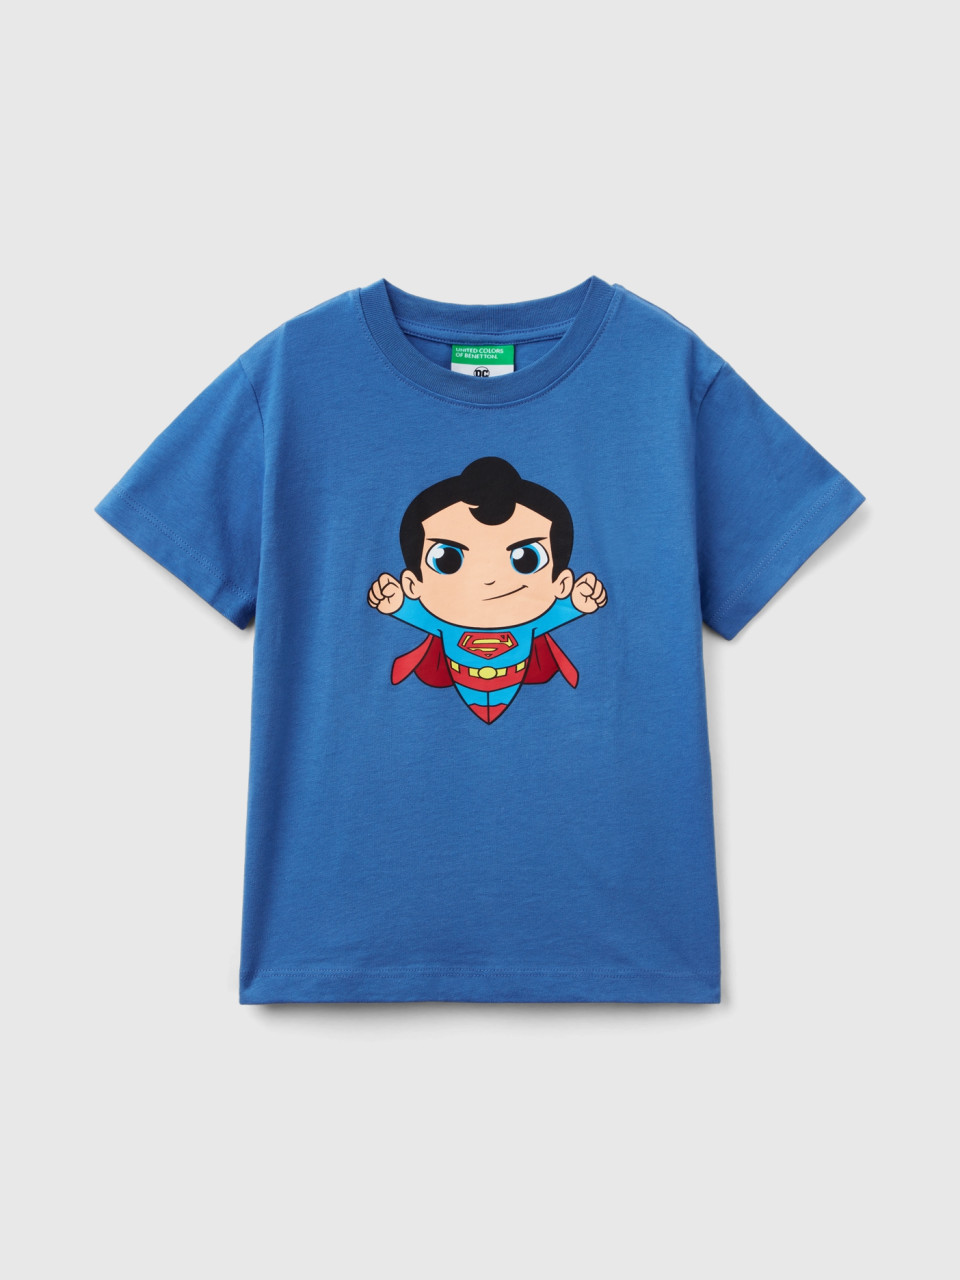 Benetton, Air Force Blue©&™ Dc Comics Superman T-shirt, size 3-4, Air Force Blue